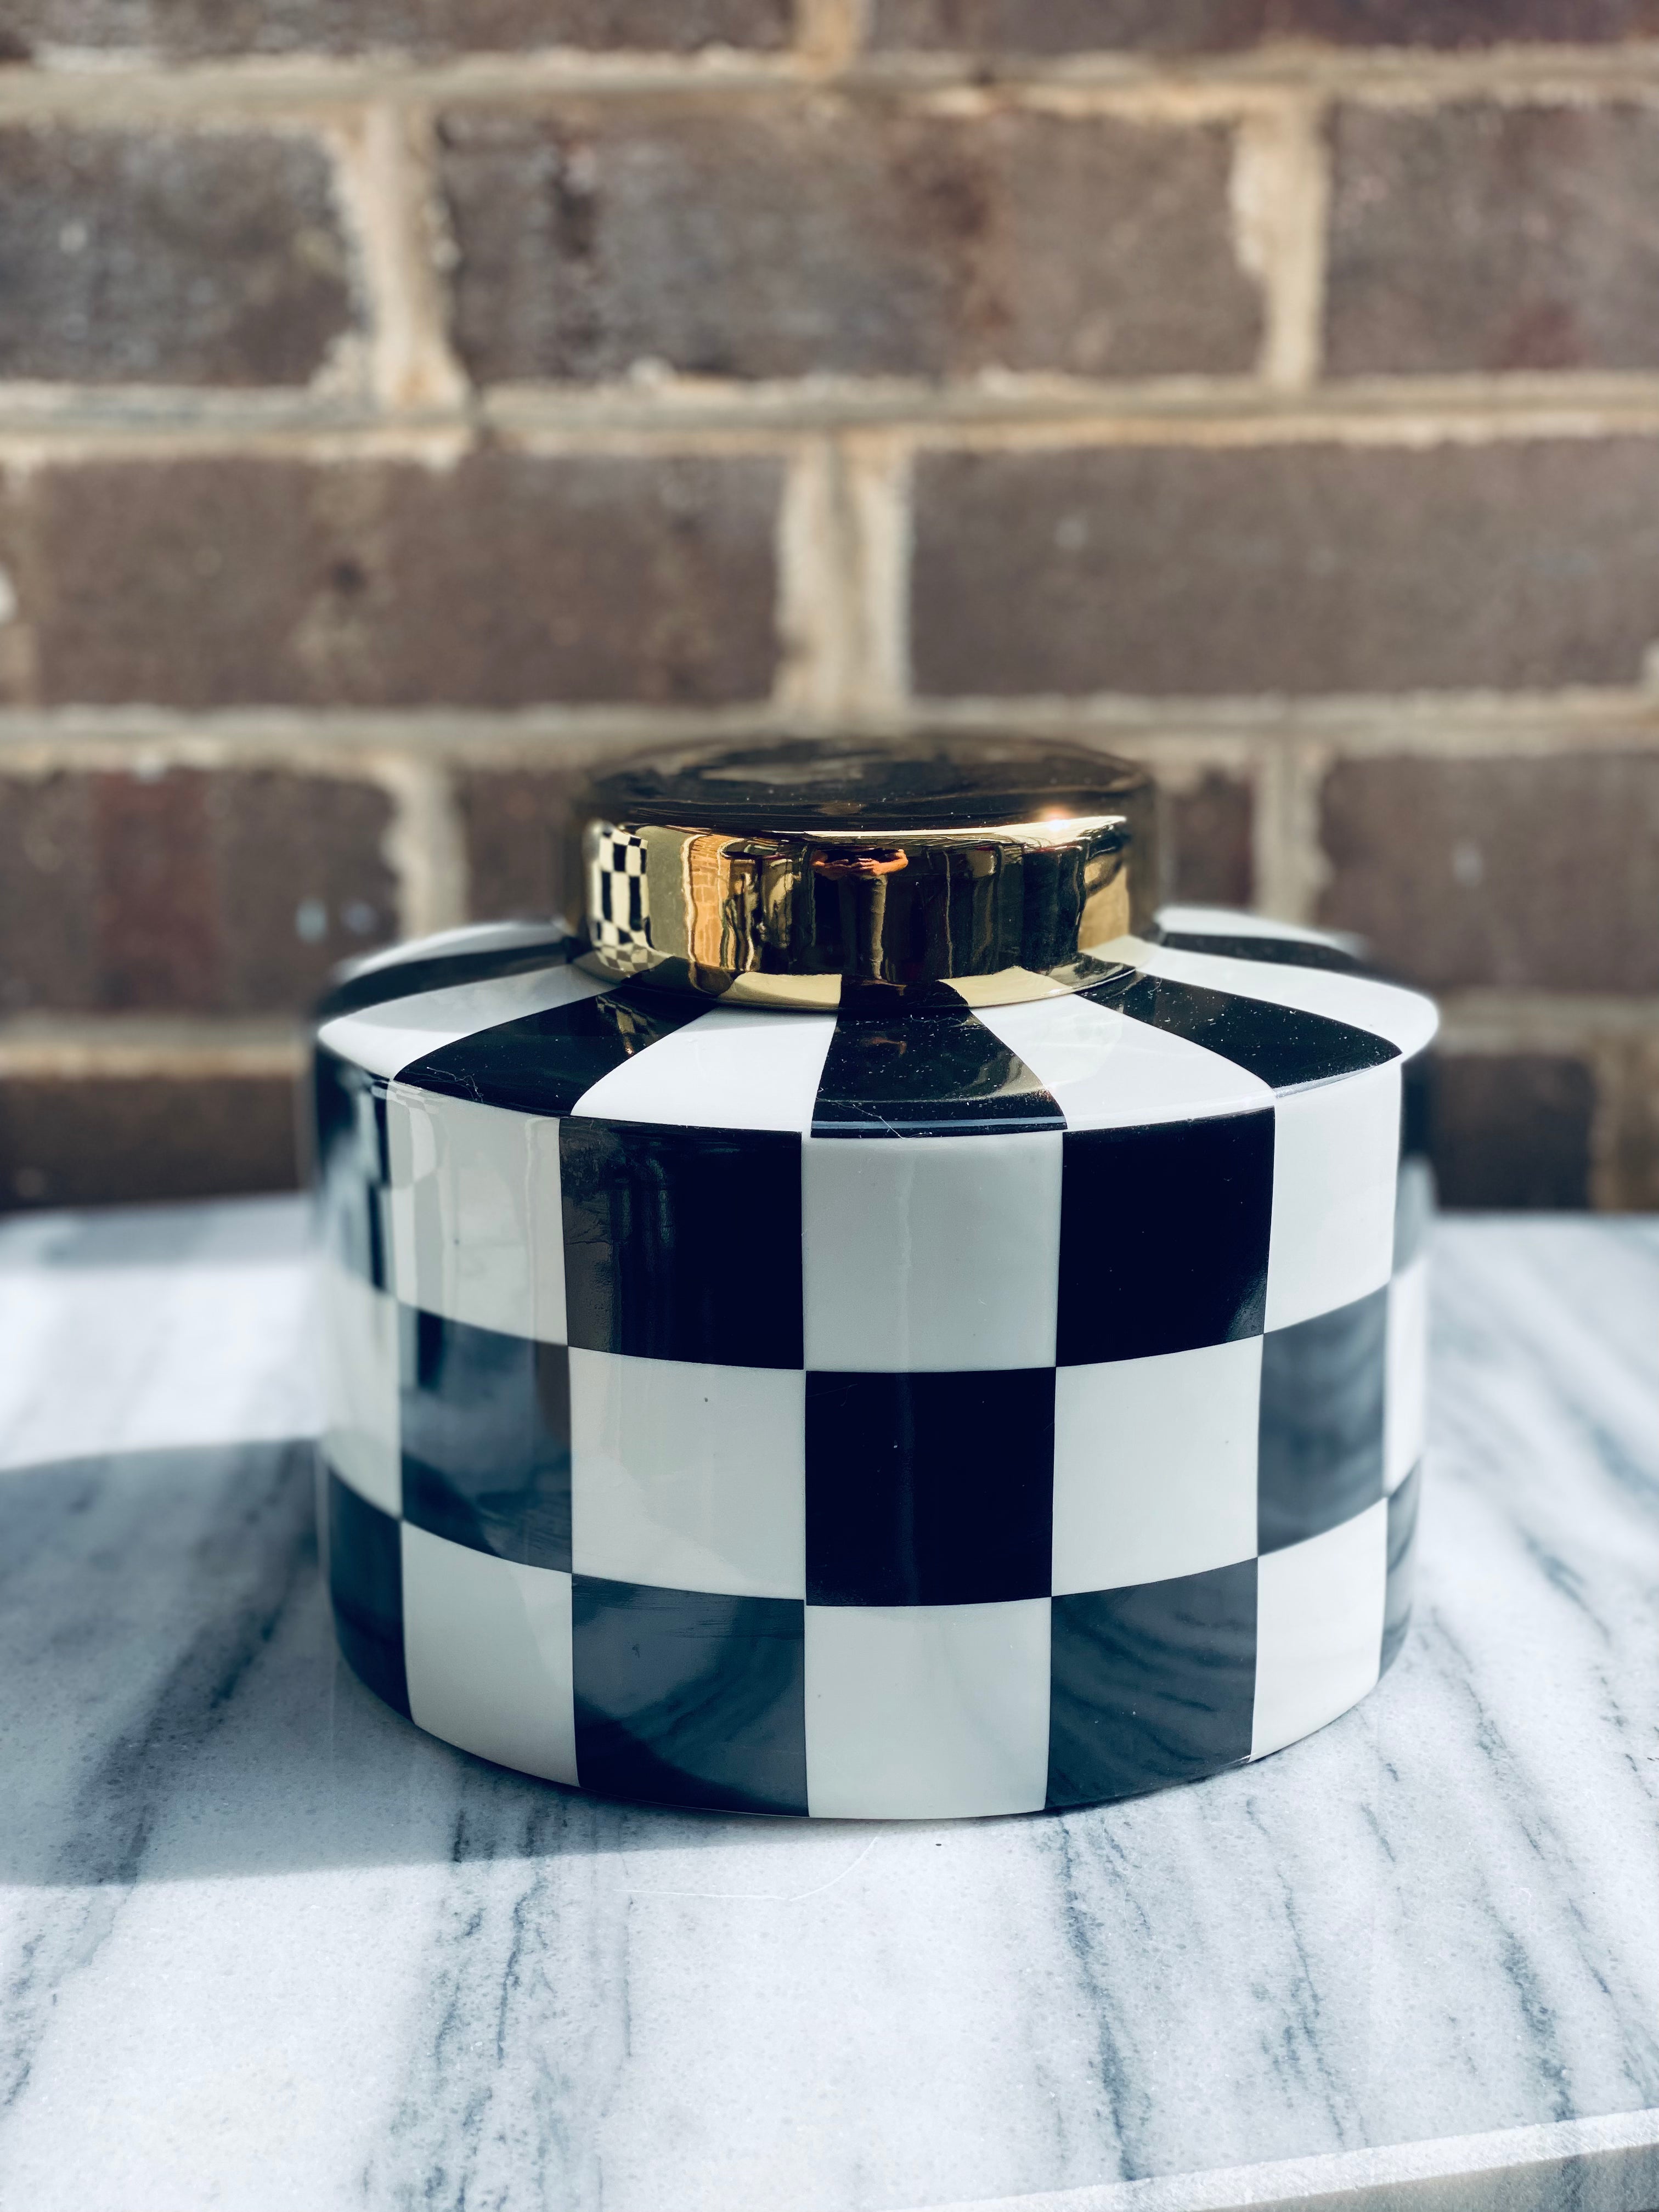 Checkered Ceramic Canister